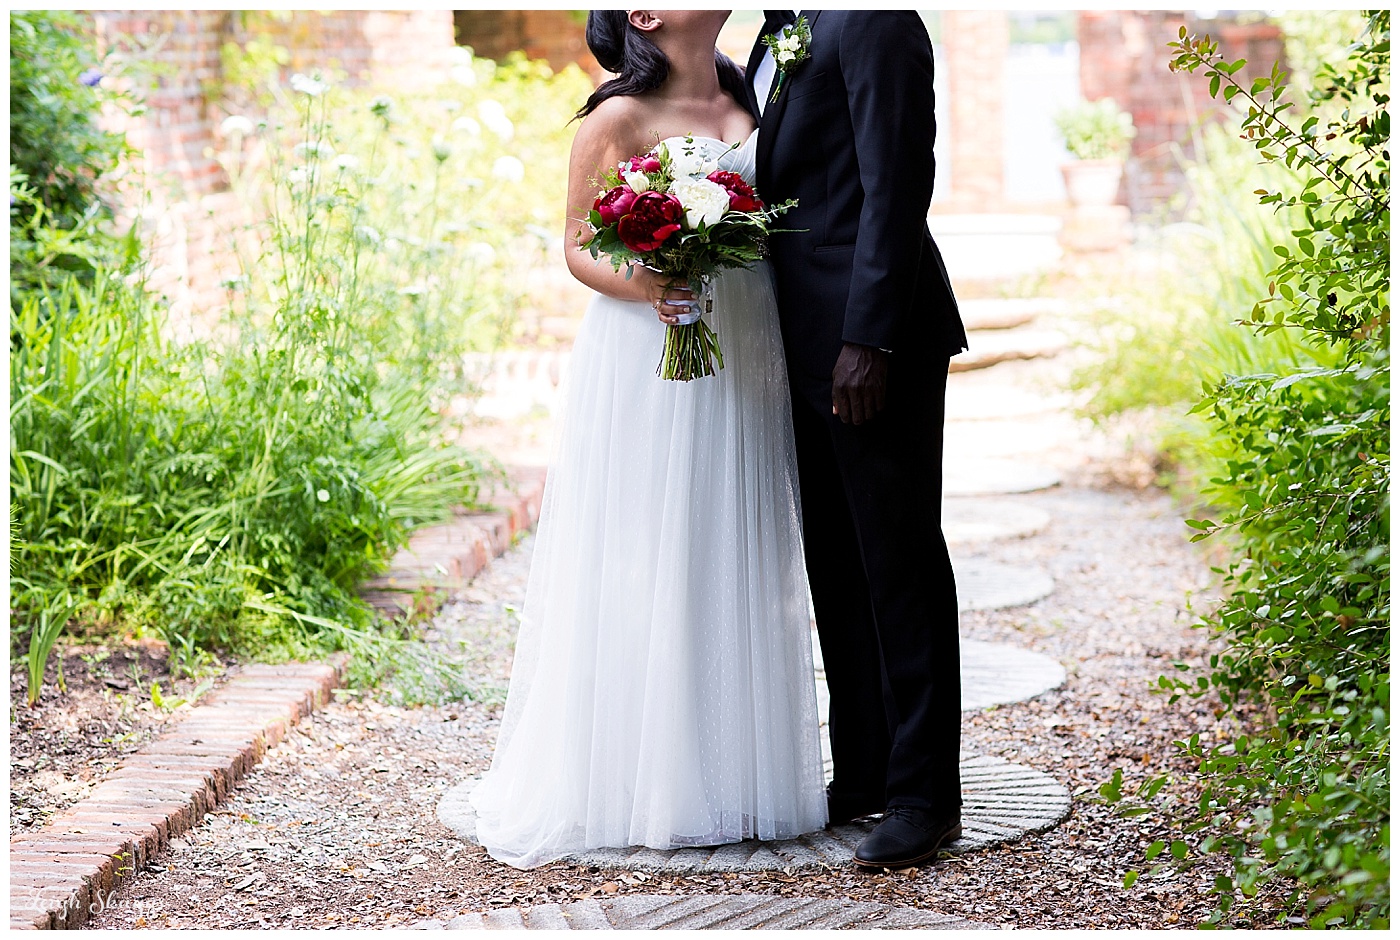 Alena & Luke are Married!  A Norfolk Virginia Hermitage Museum and Garden Wedding